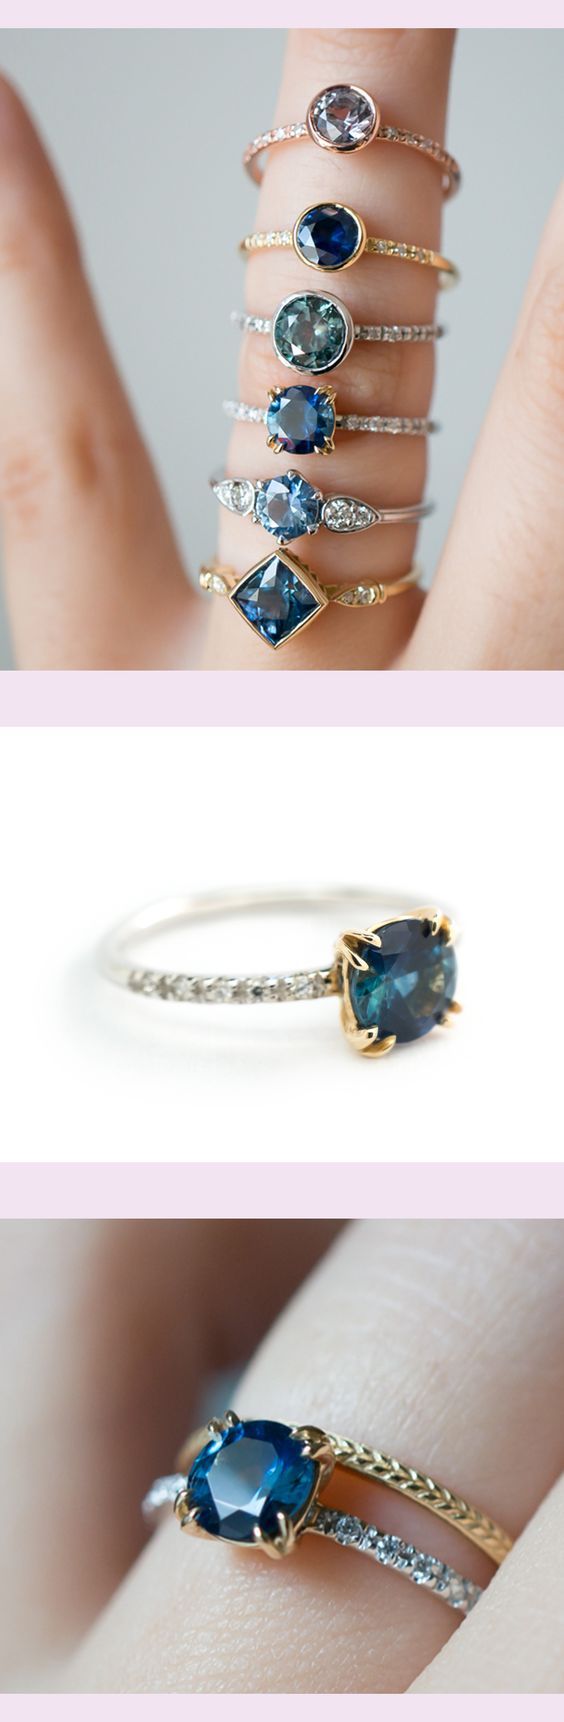 زفاف - Saphire Rings